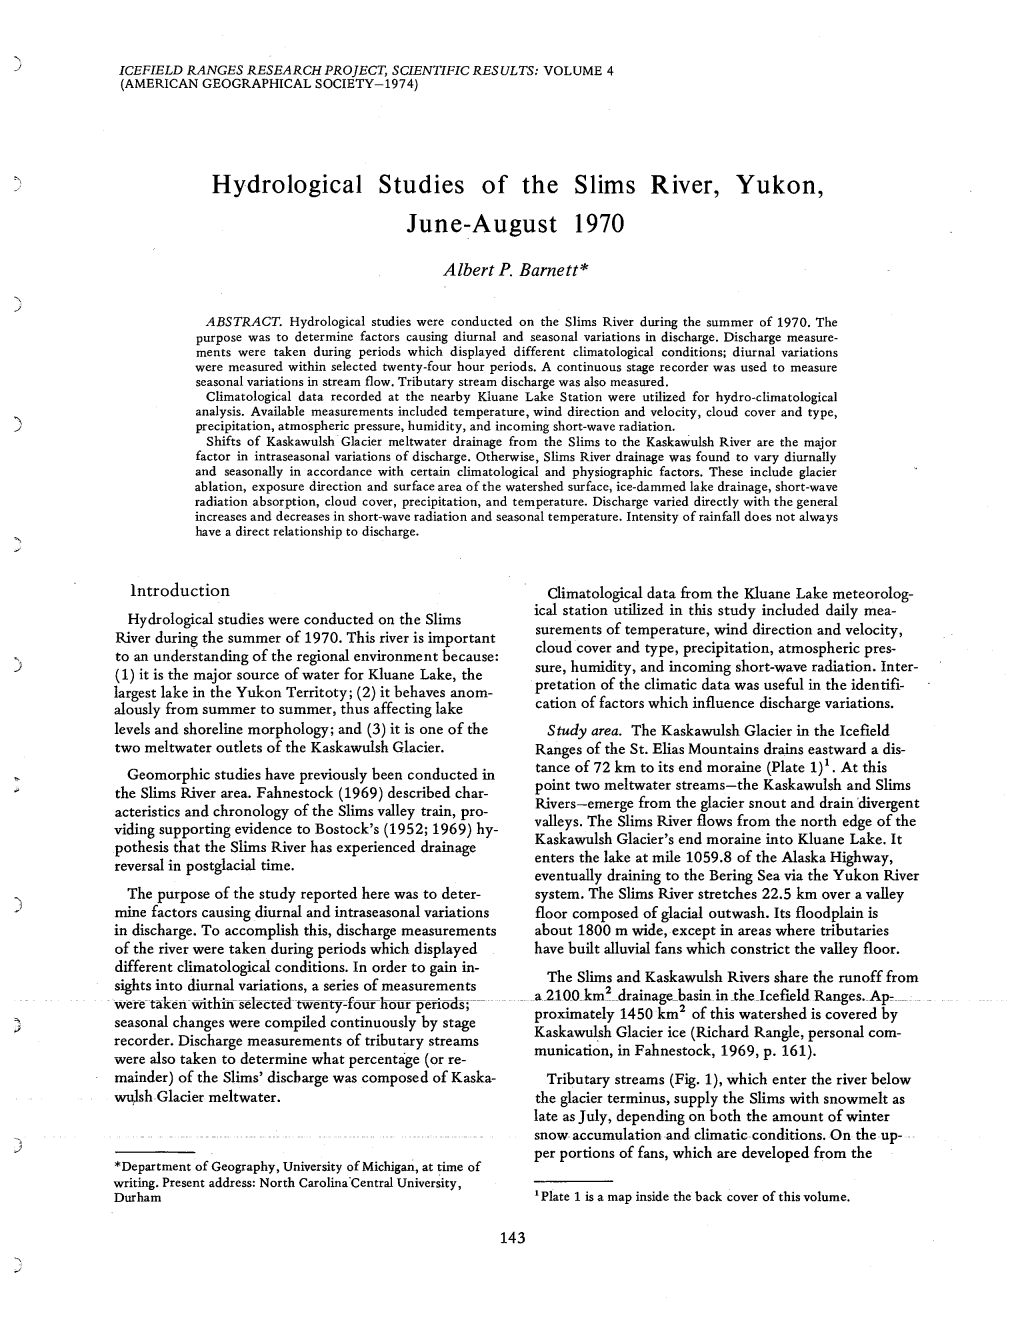 Hydrological Studies of the Slims River, Yukon, June-August 1970